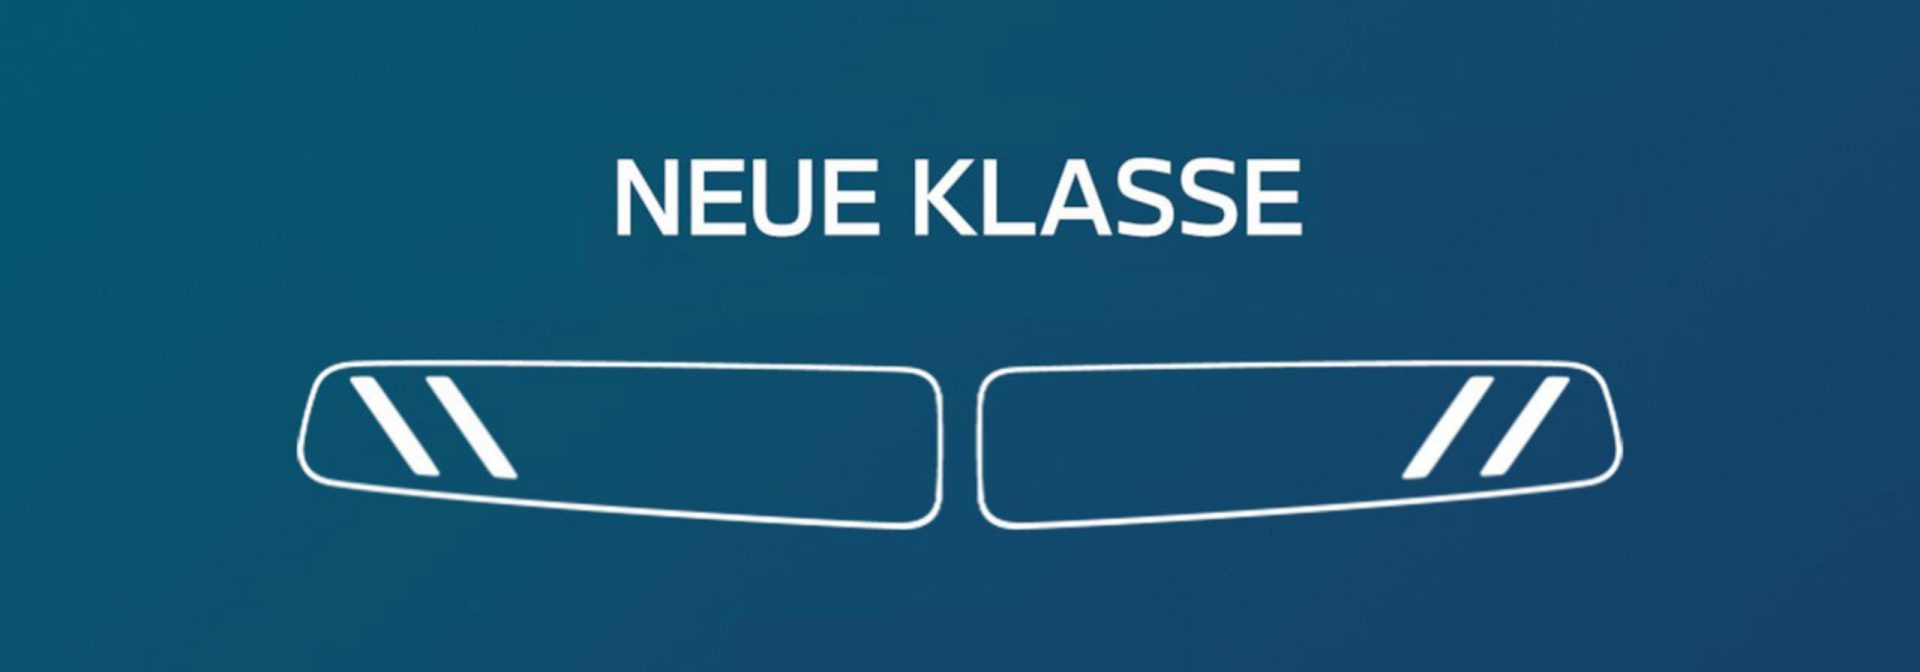 Neue Klasse – a new era of electric mobility.